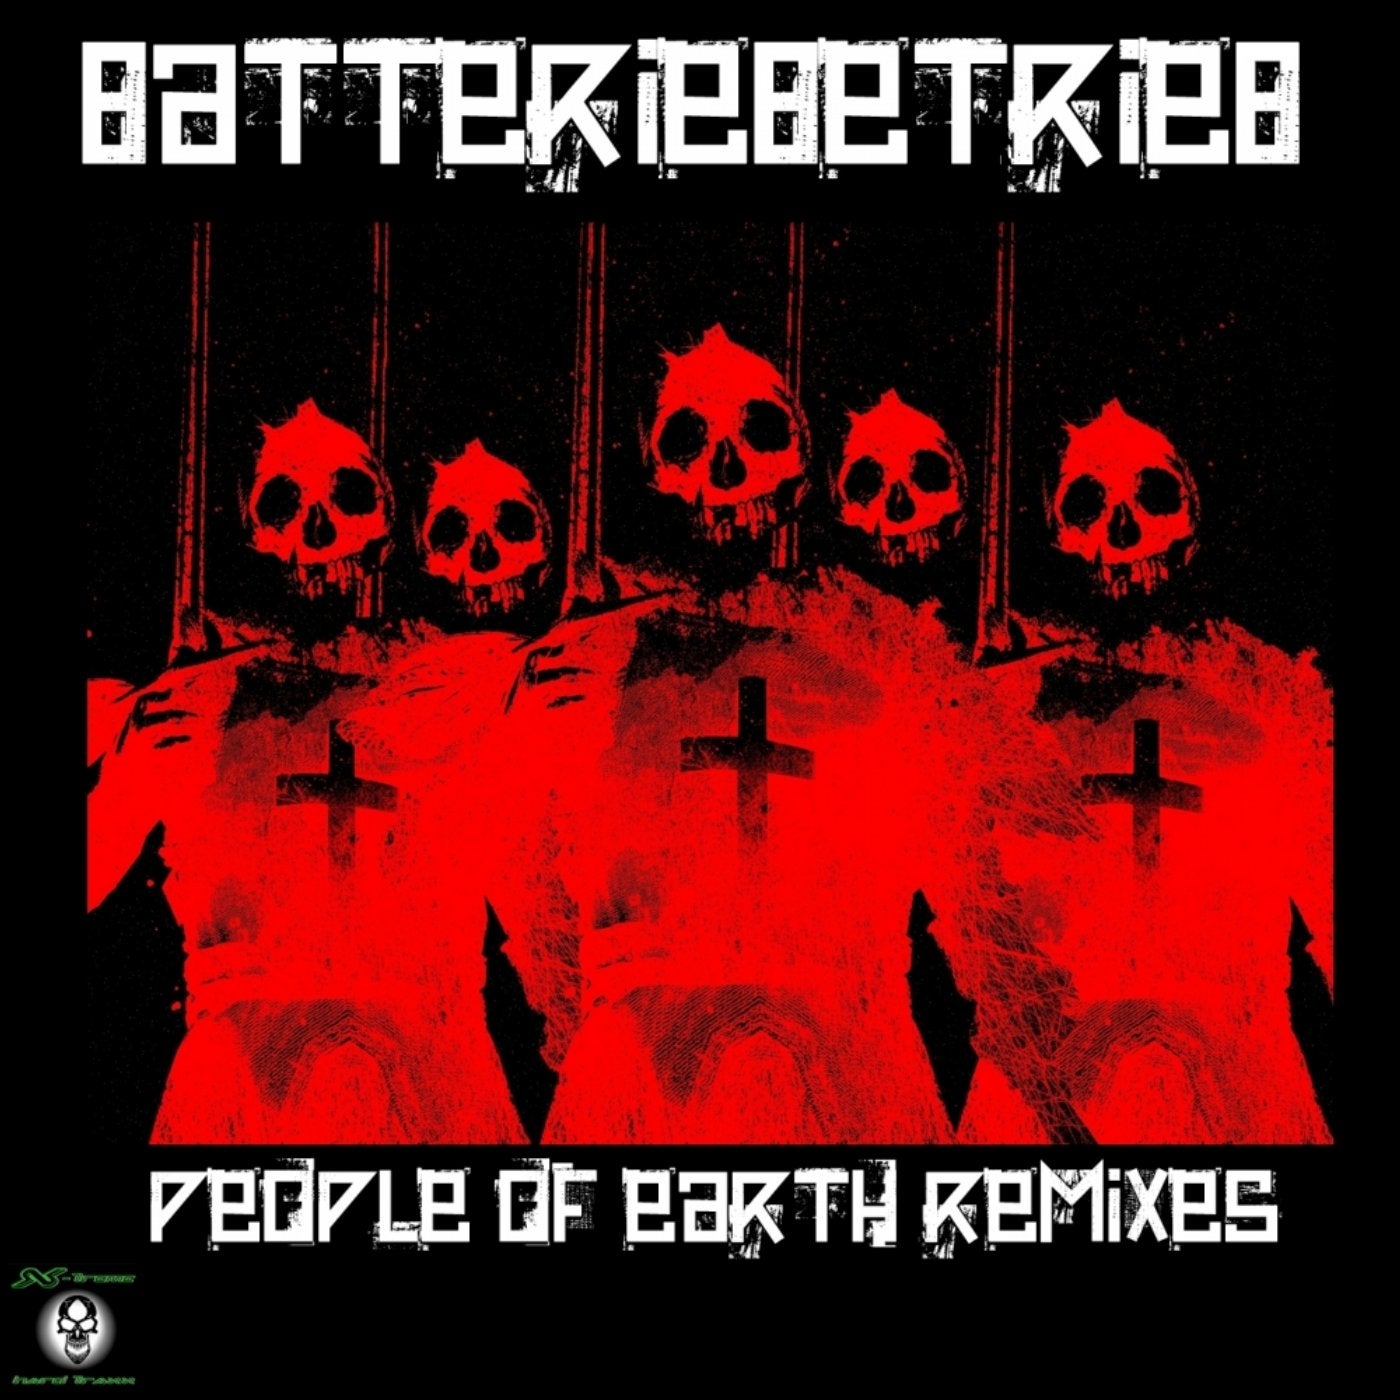 People of Earth Remixes